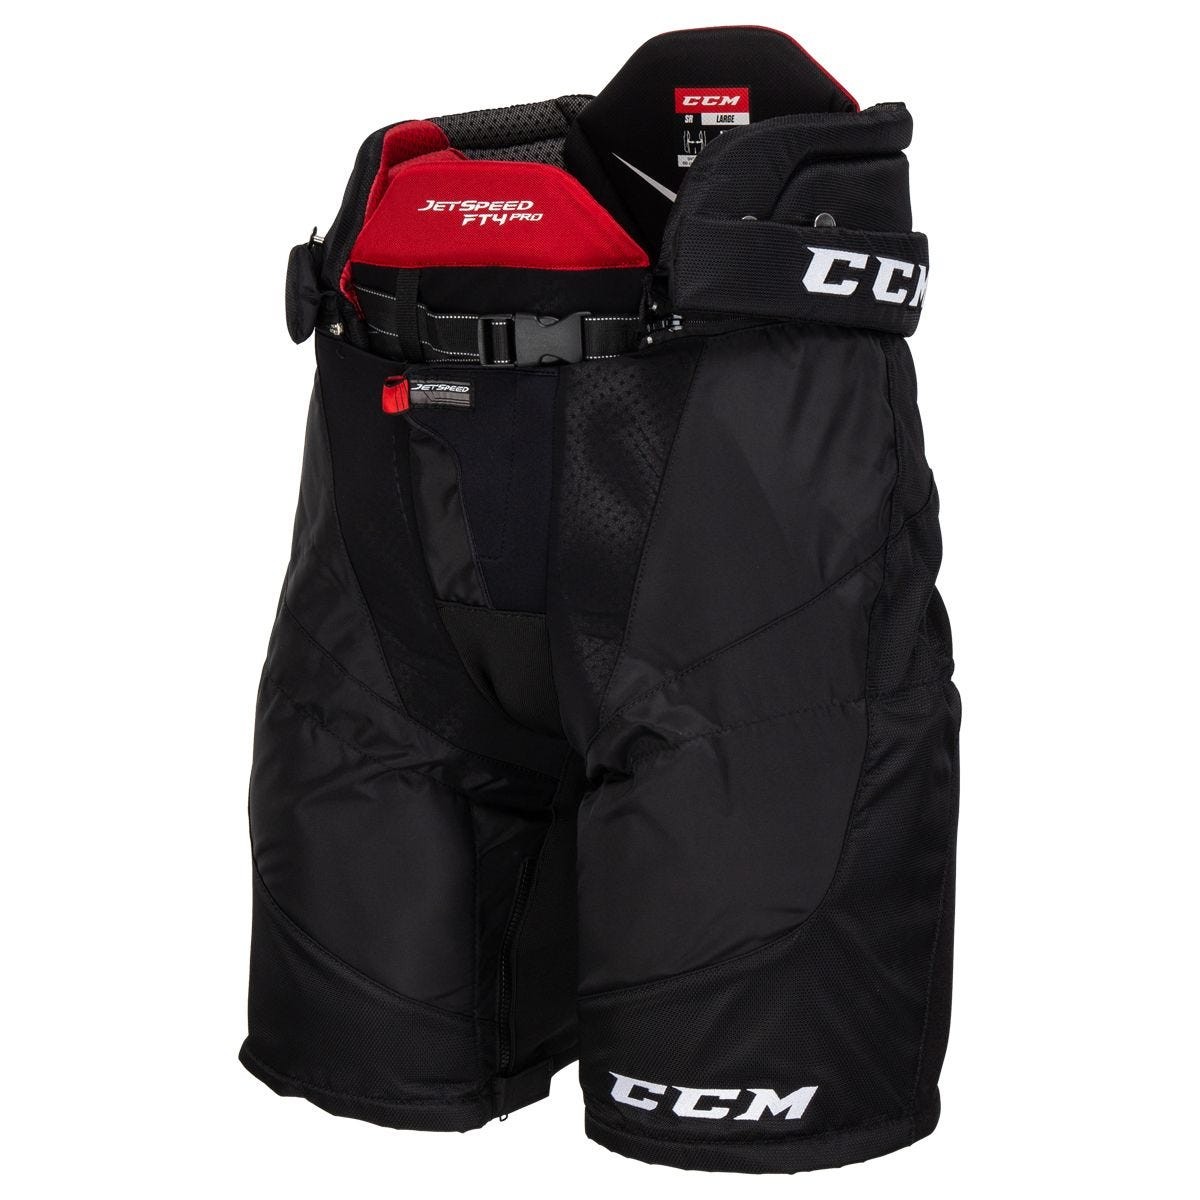 CCM Jetspeed FT4 Pro Junior Ice Hockey Pants